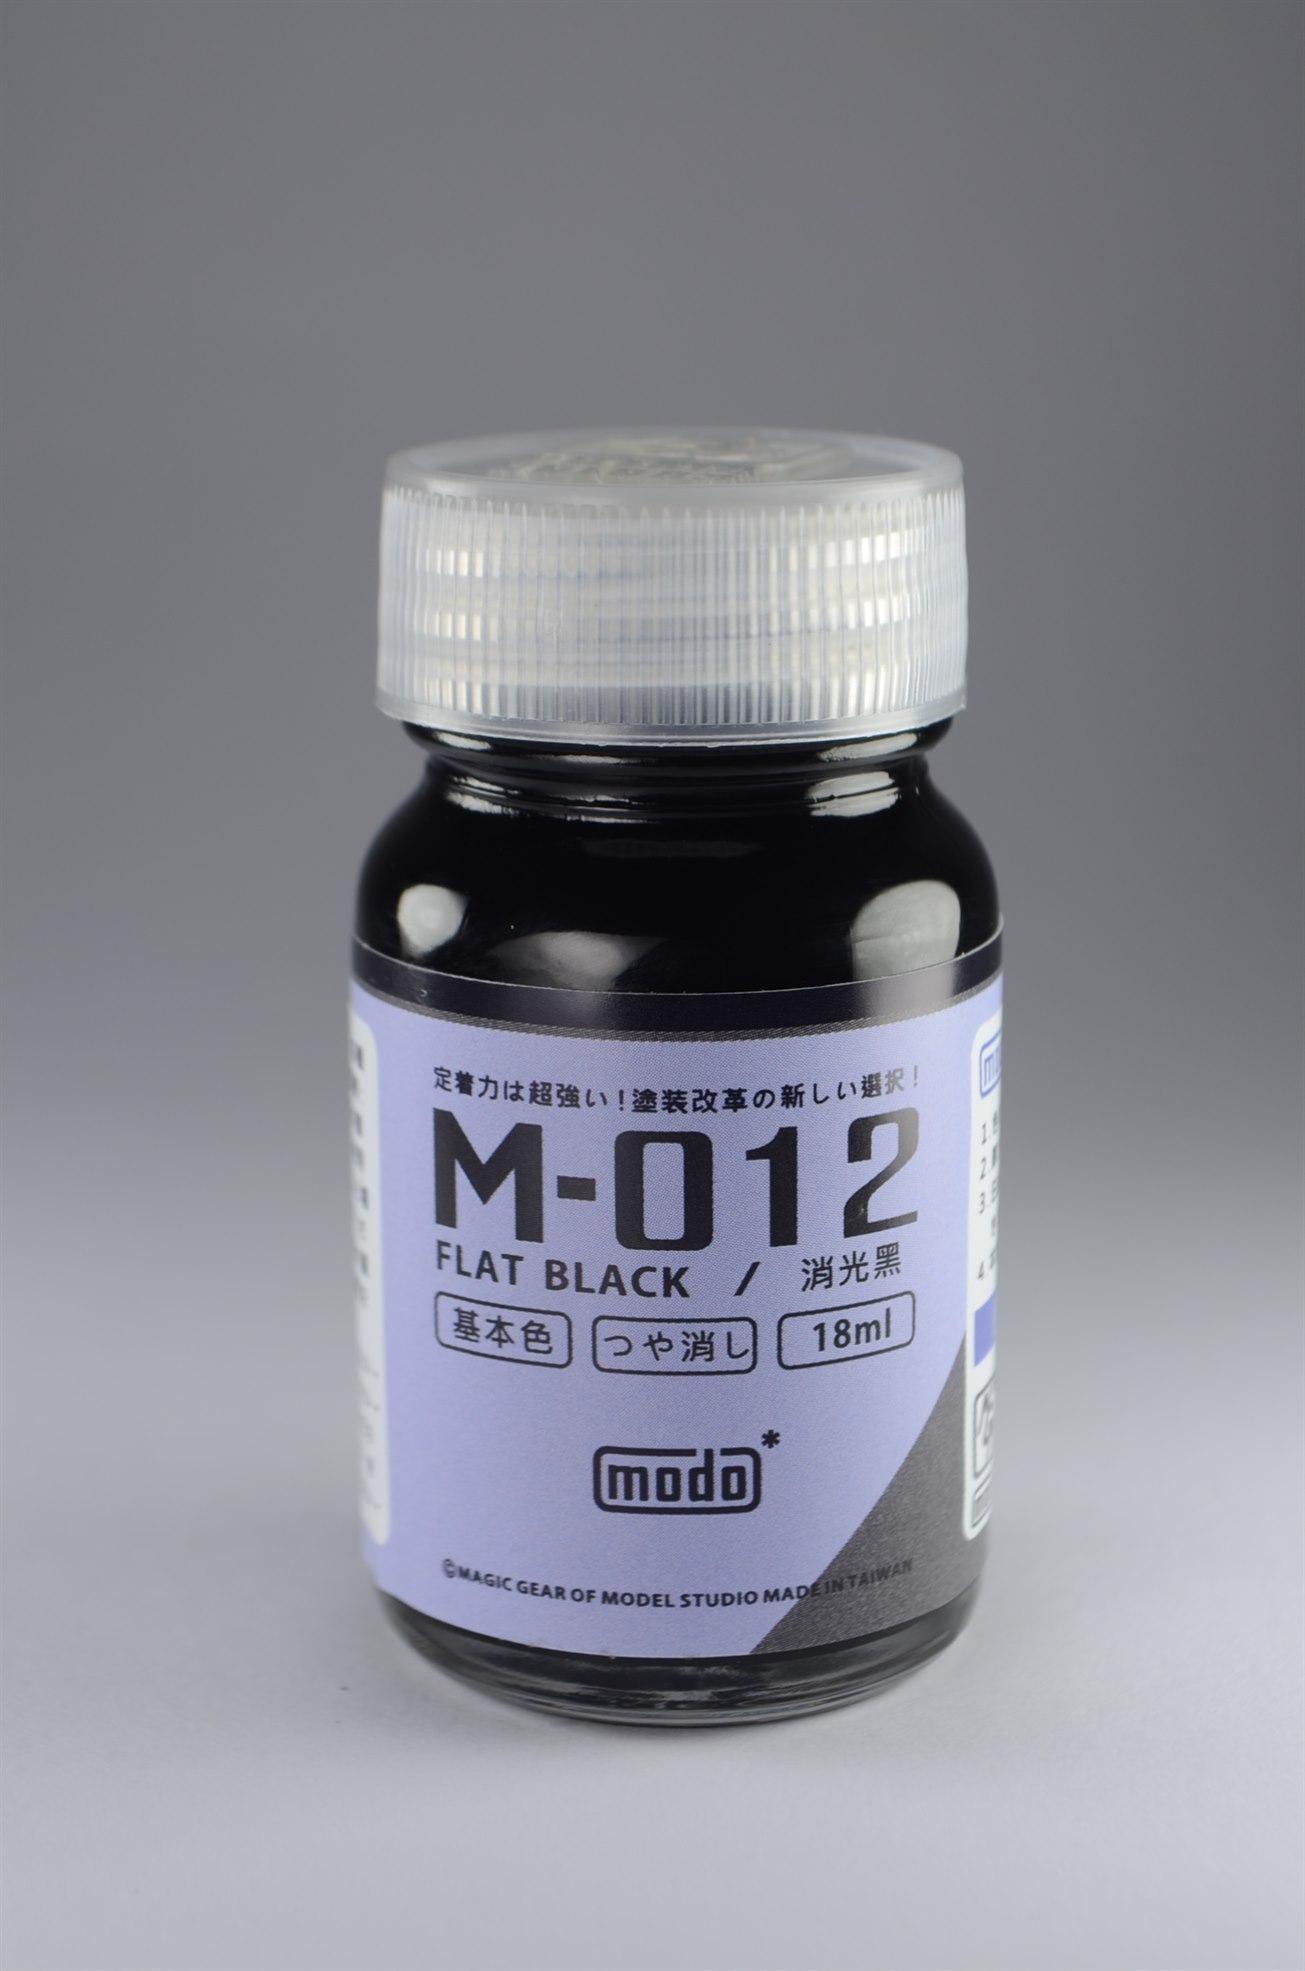 MODO M-012 Flat Black 18ML